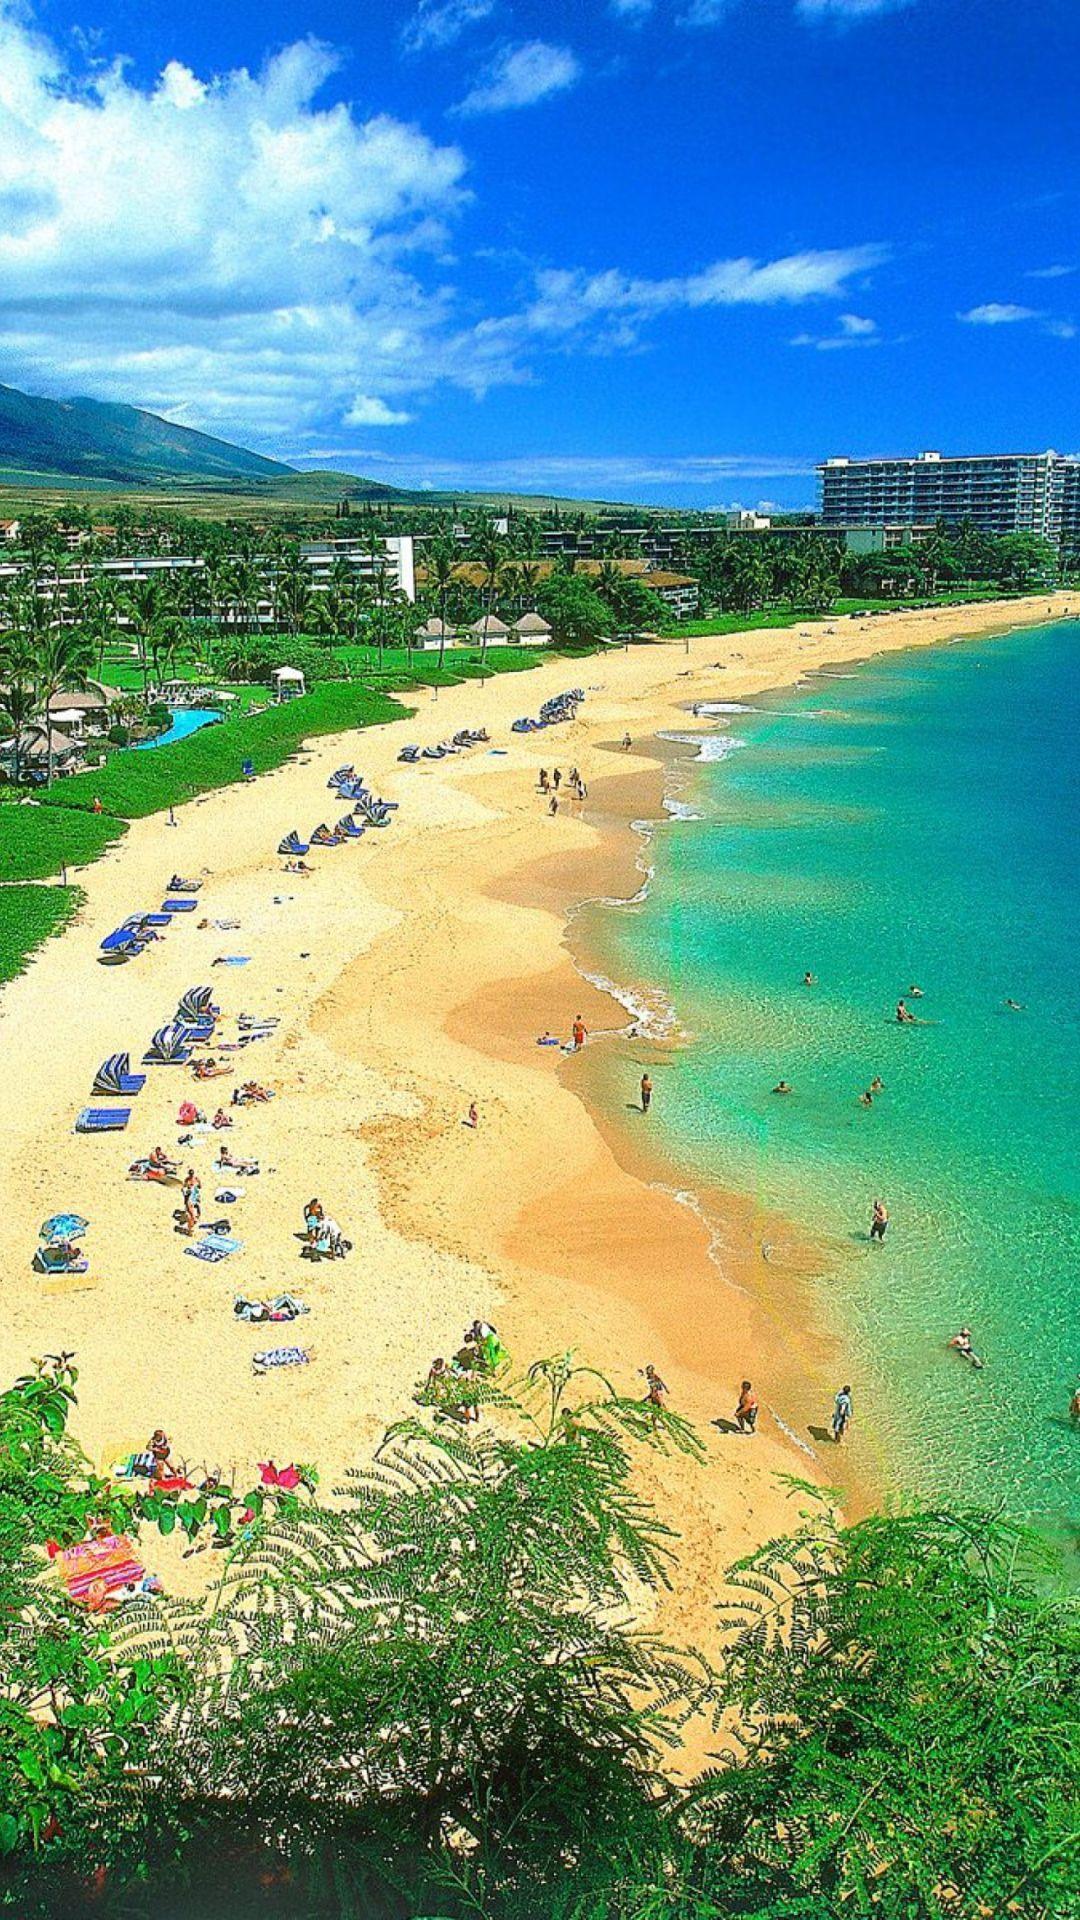 Background Kaanapali Beach Maui Hawaii For iPhone Plus Full HD Pics